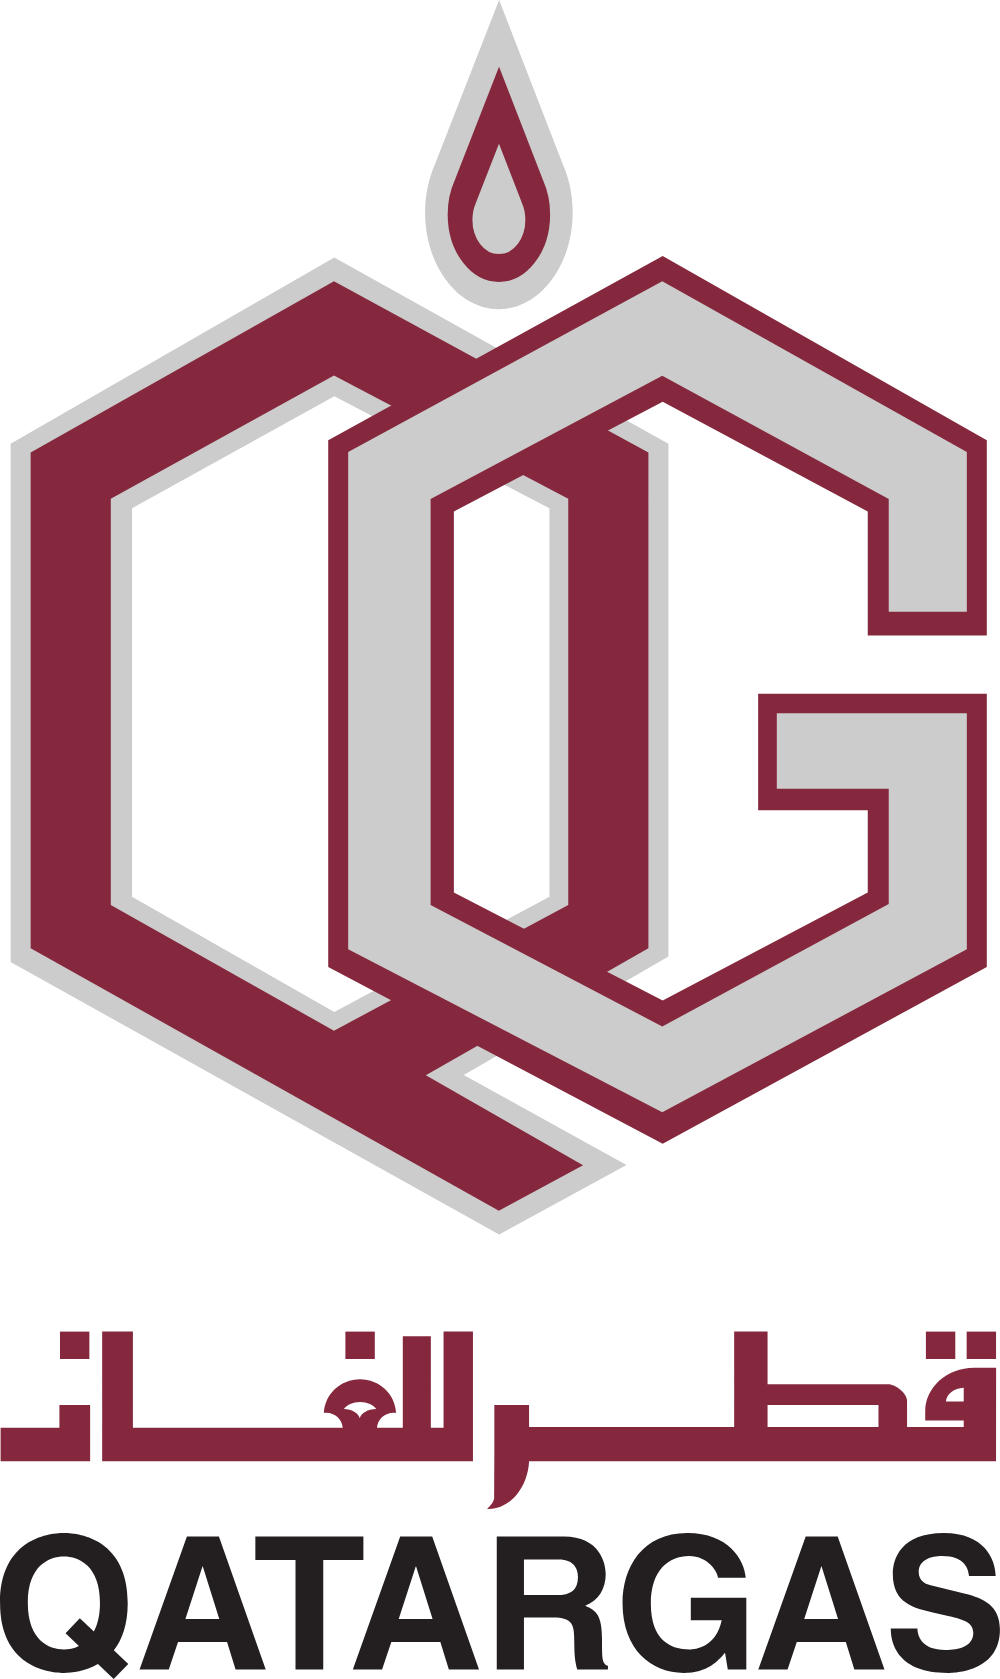 Qatargas Logo Logos